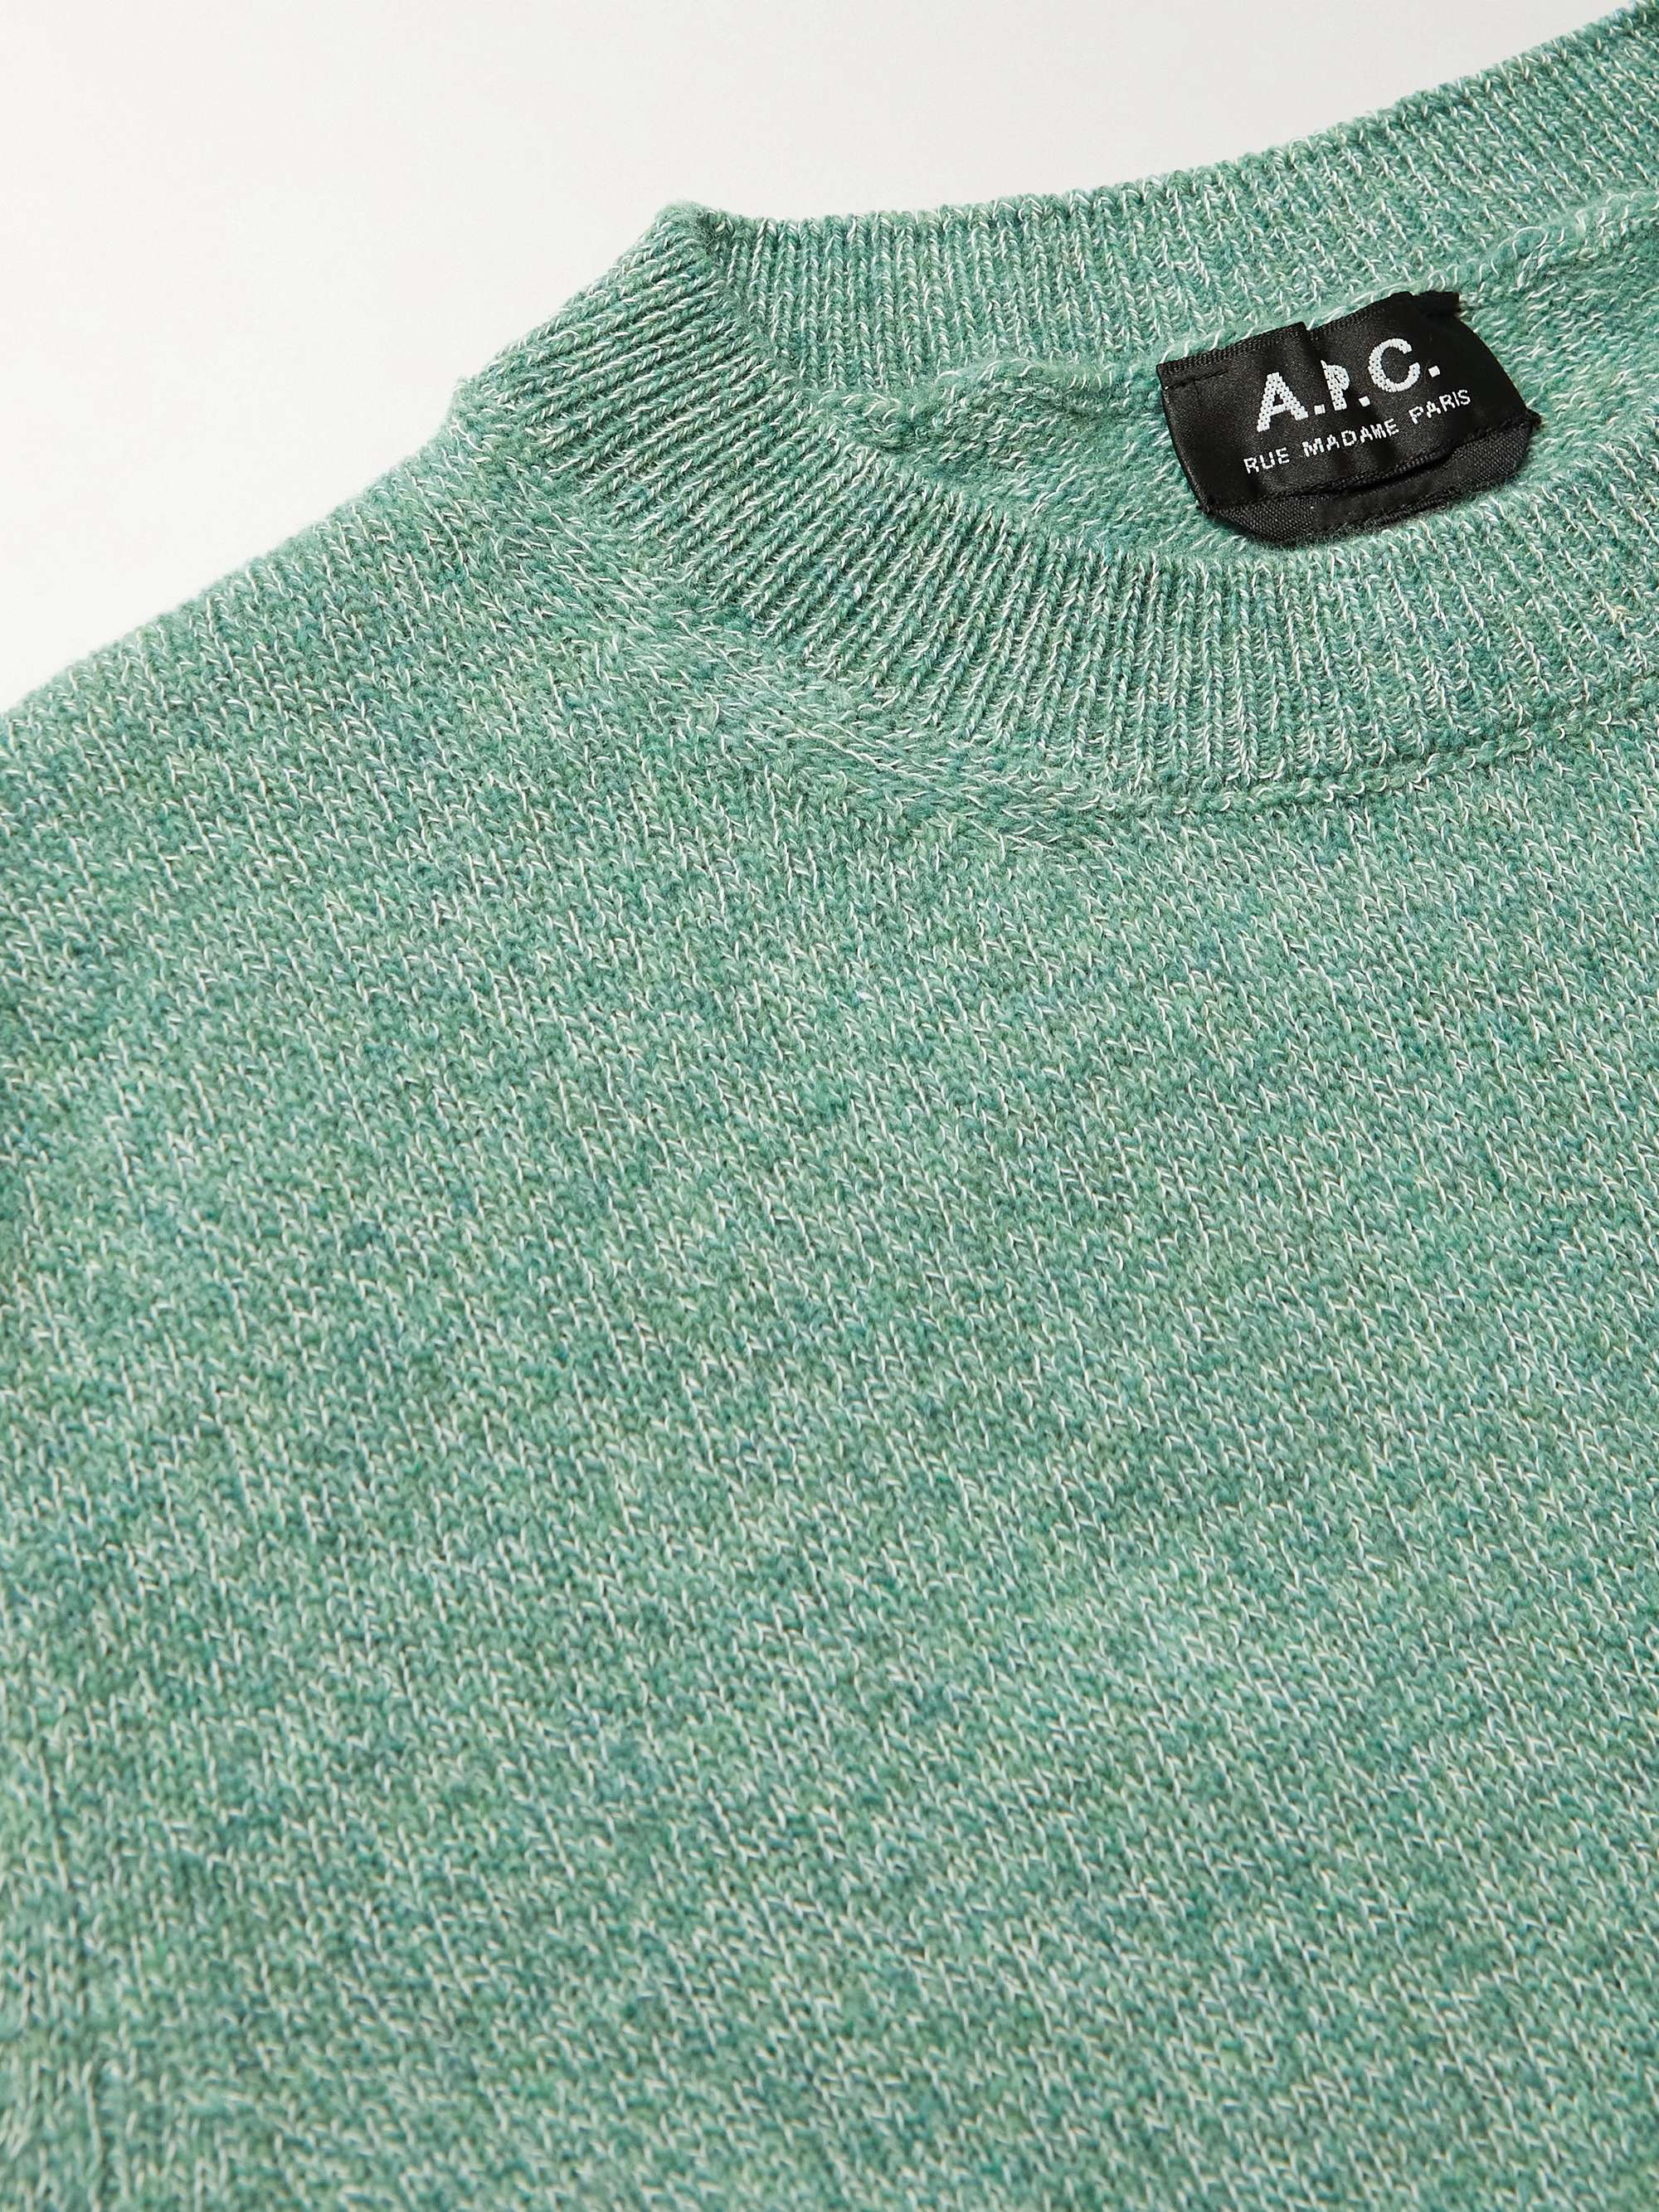 A.P.C. Benoit Wool and Cotton-Blend Sweater